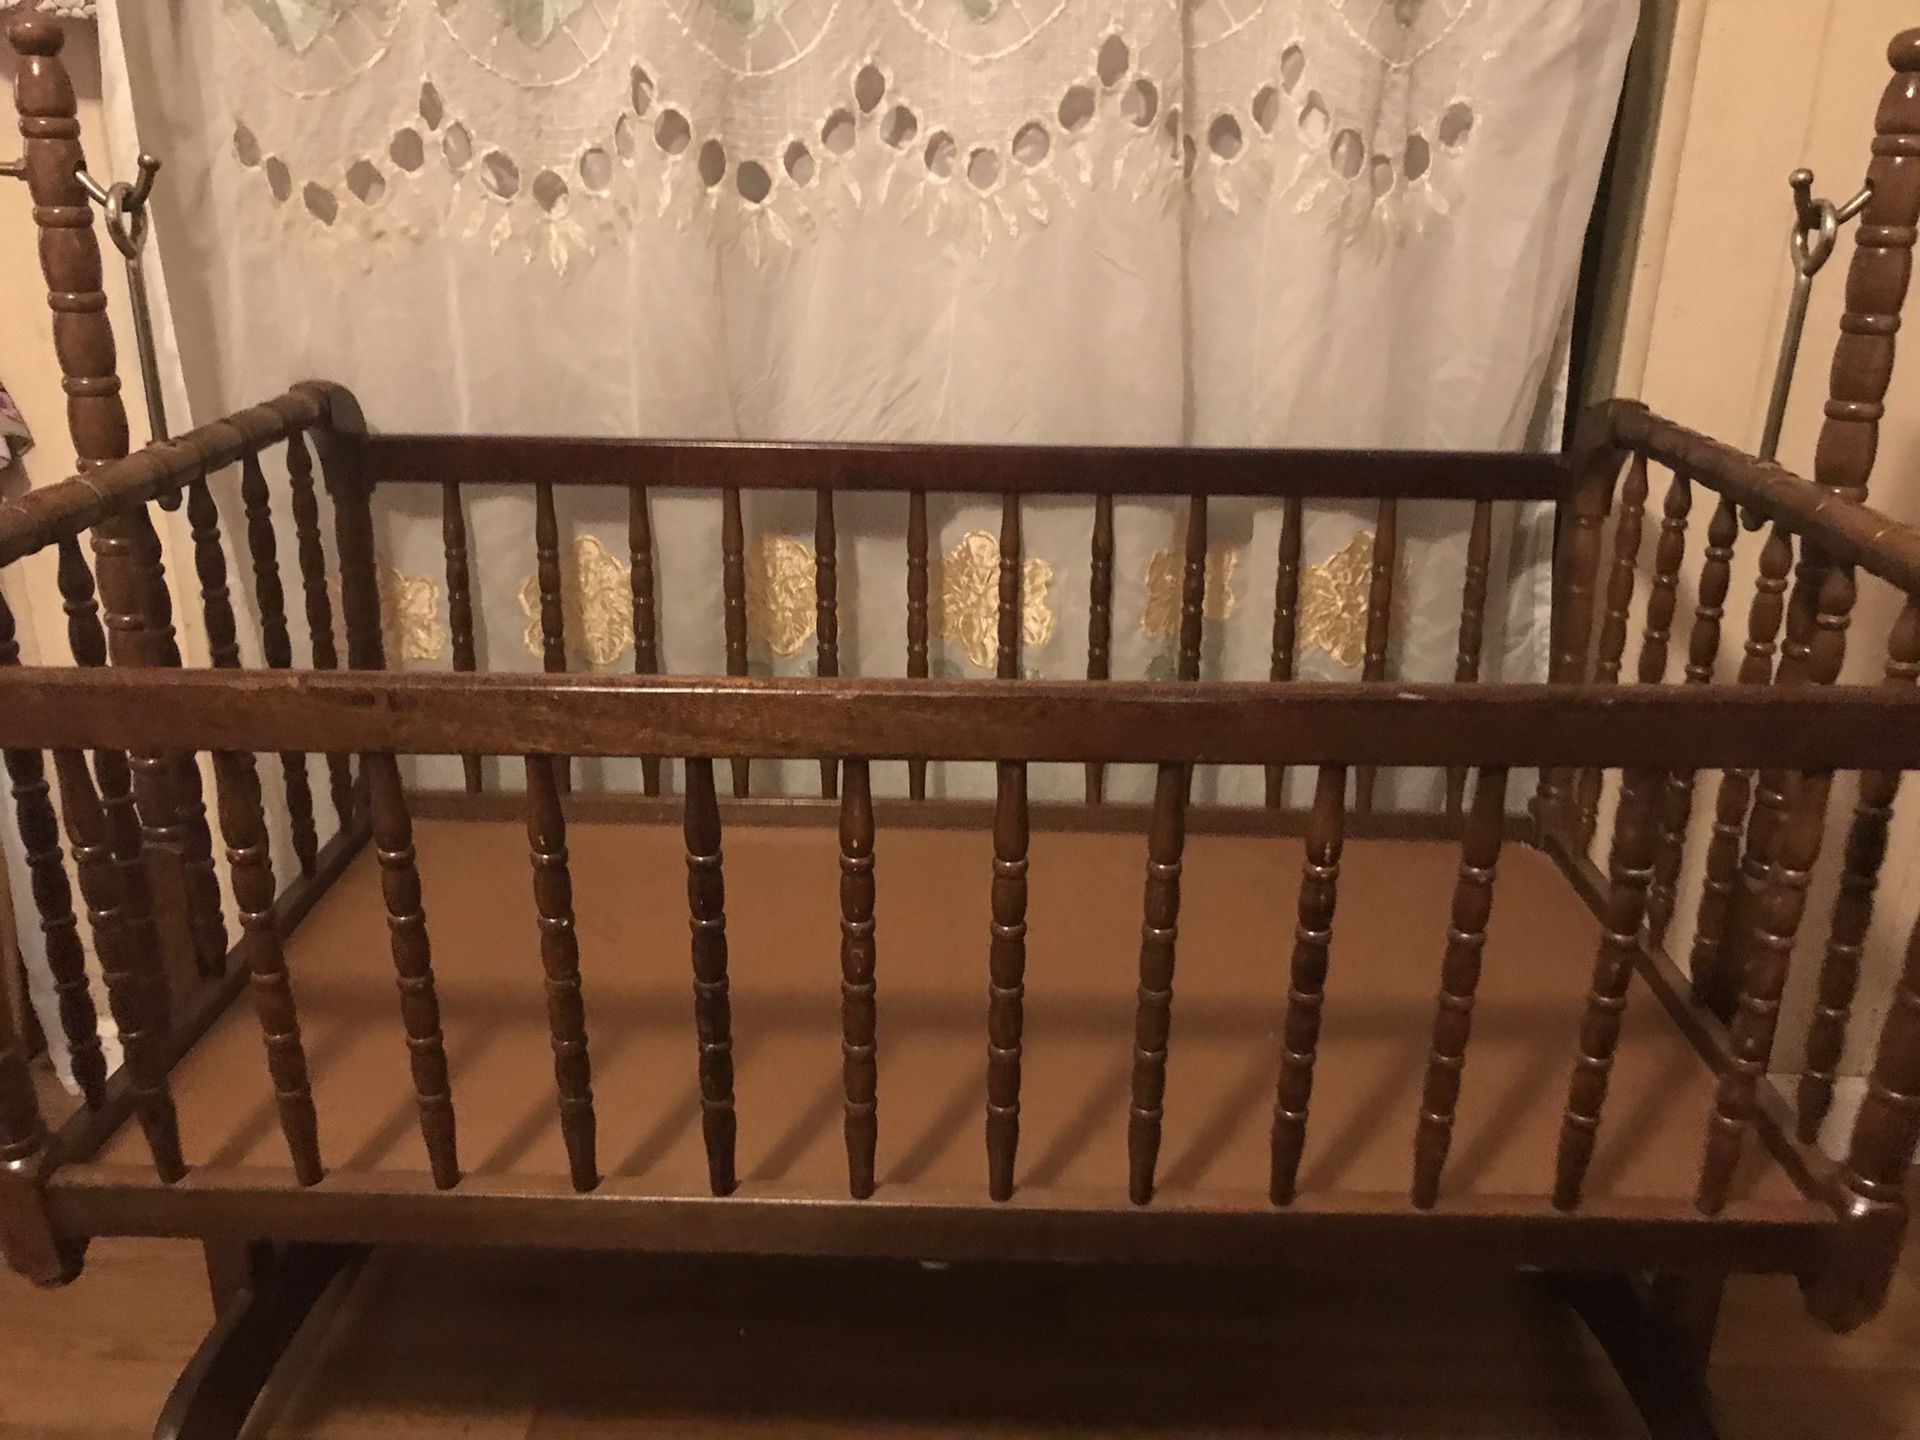 Small baby crib